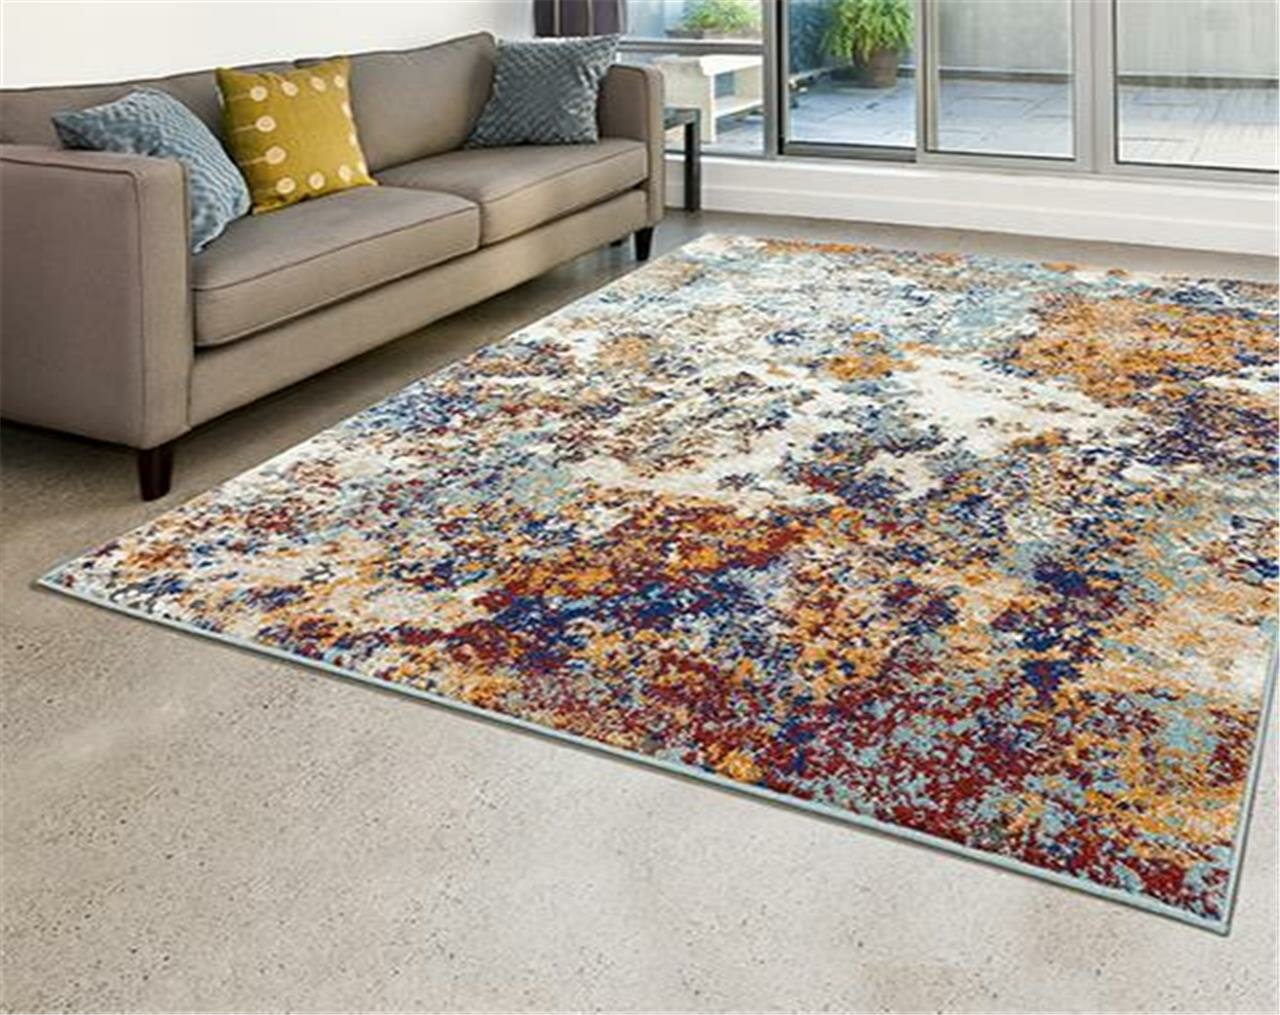 Ultra Soft 100% Polyester Carpet for Living Room,Beige 4’x6’ HomeDec Modern Abstract Area Rug 